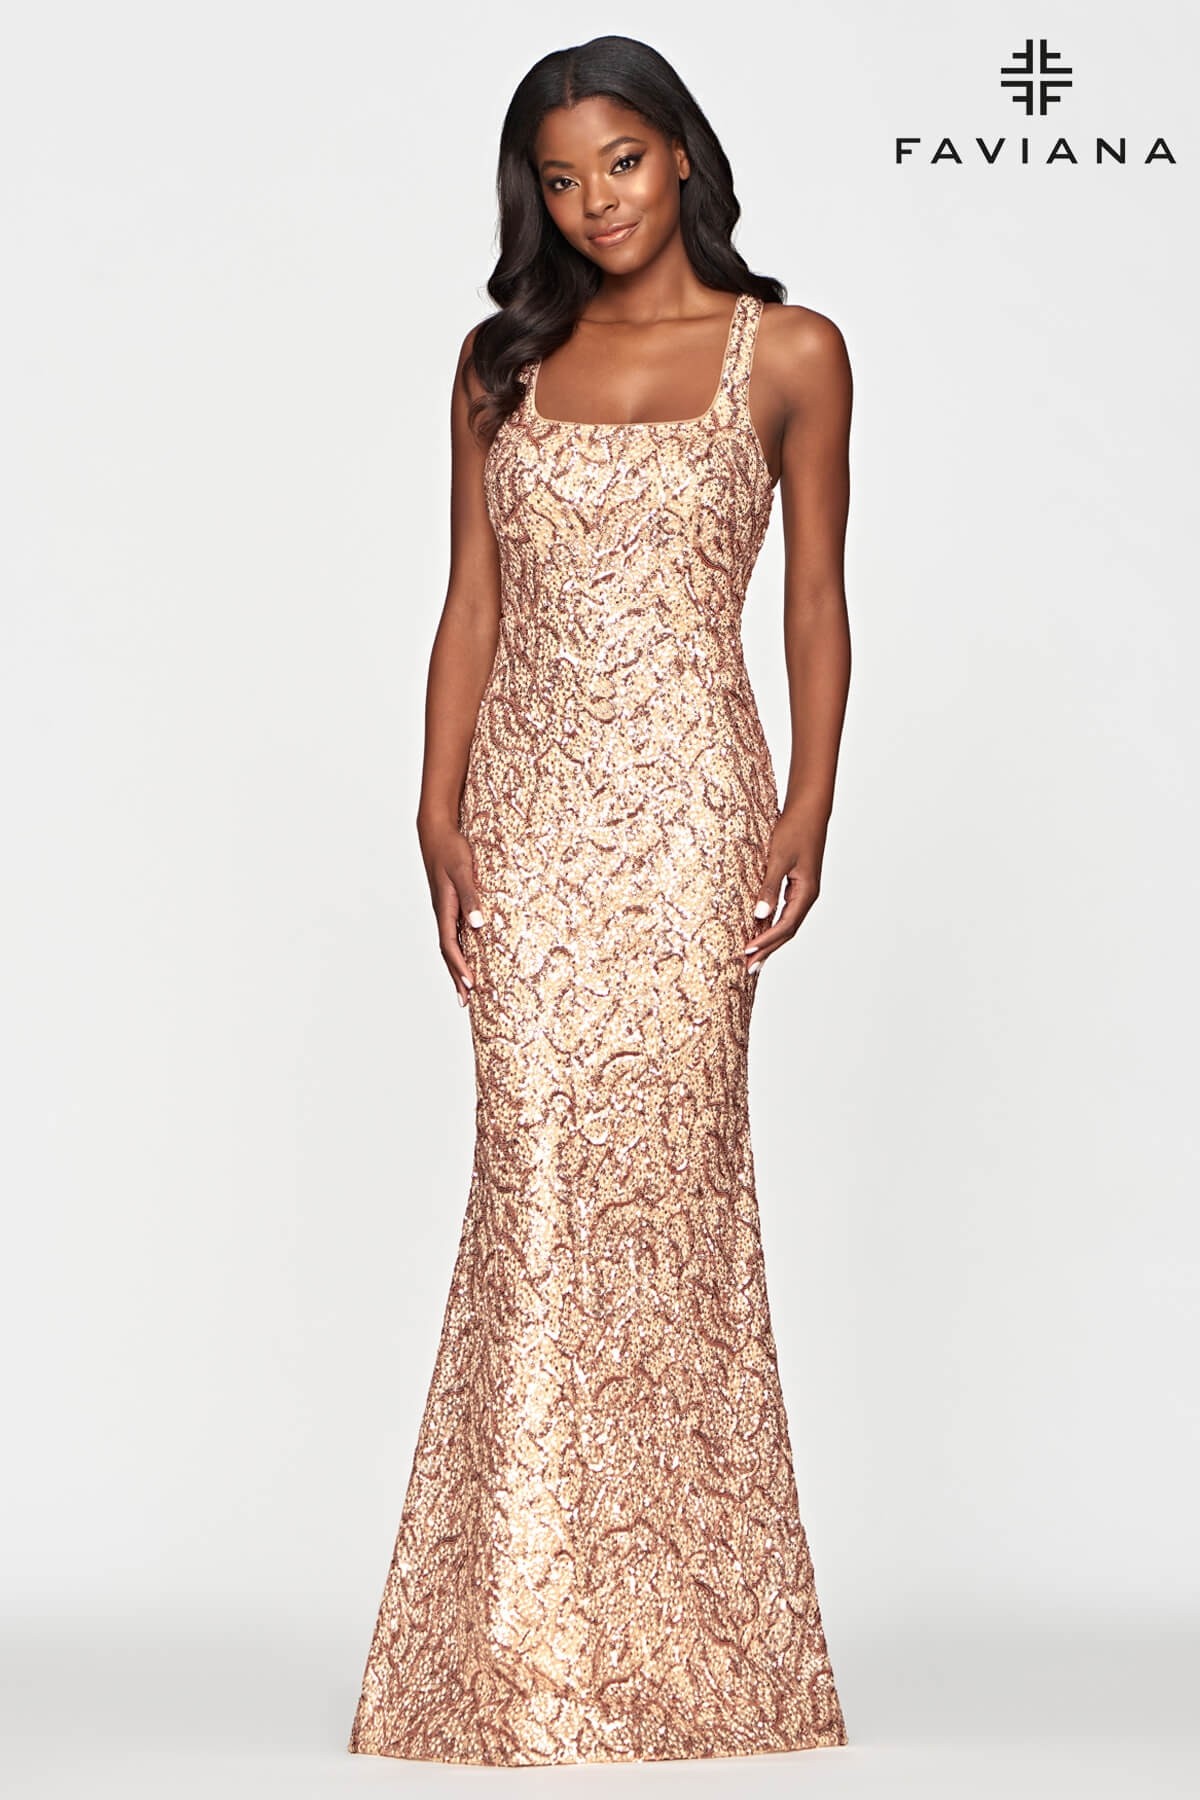 Faviana S10651 Prom Dress